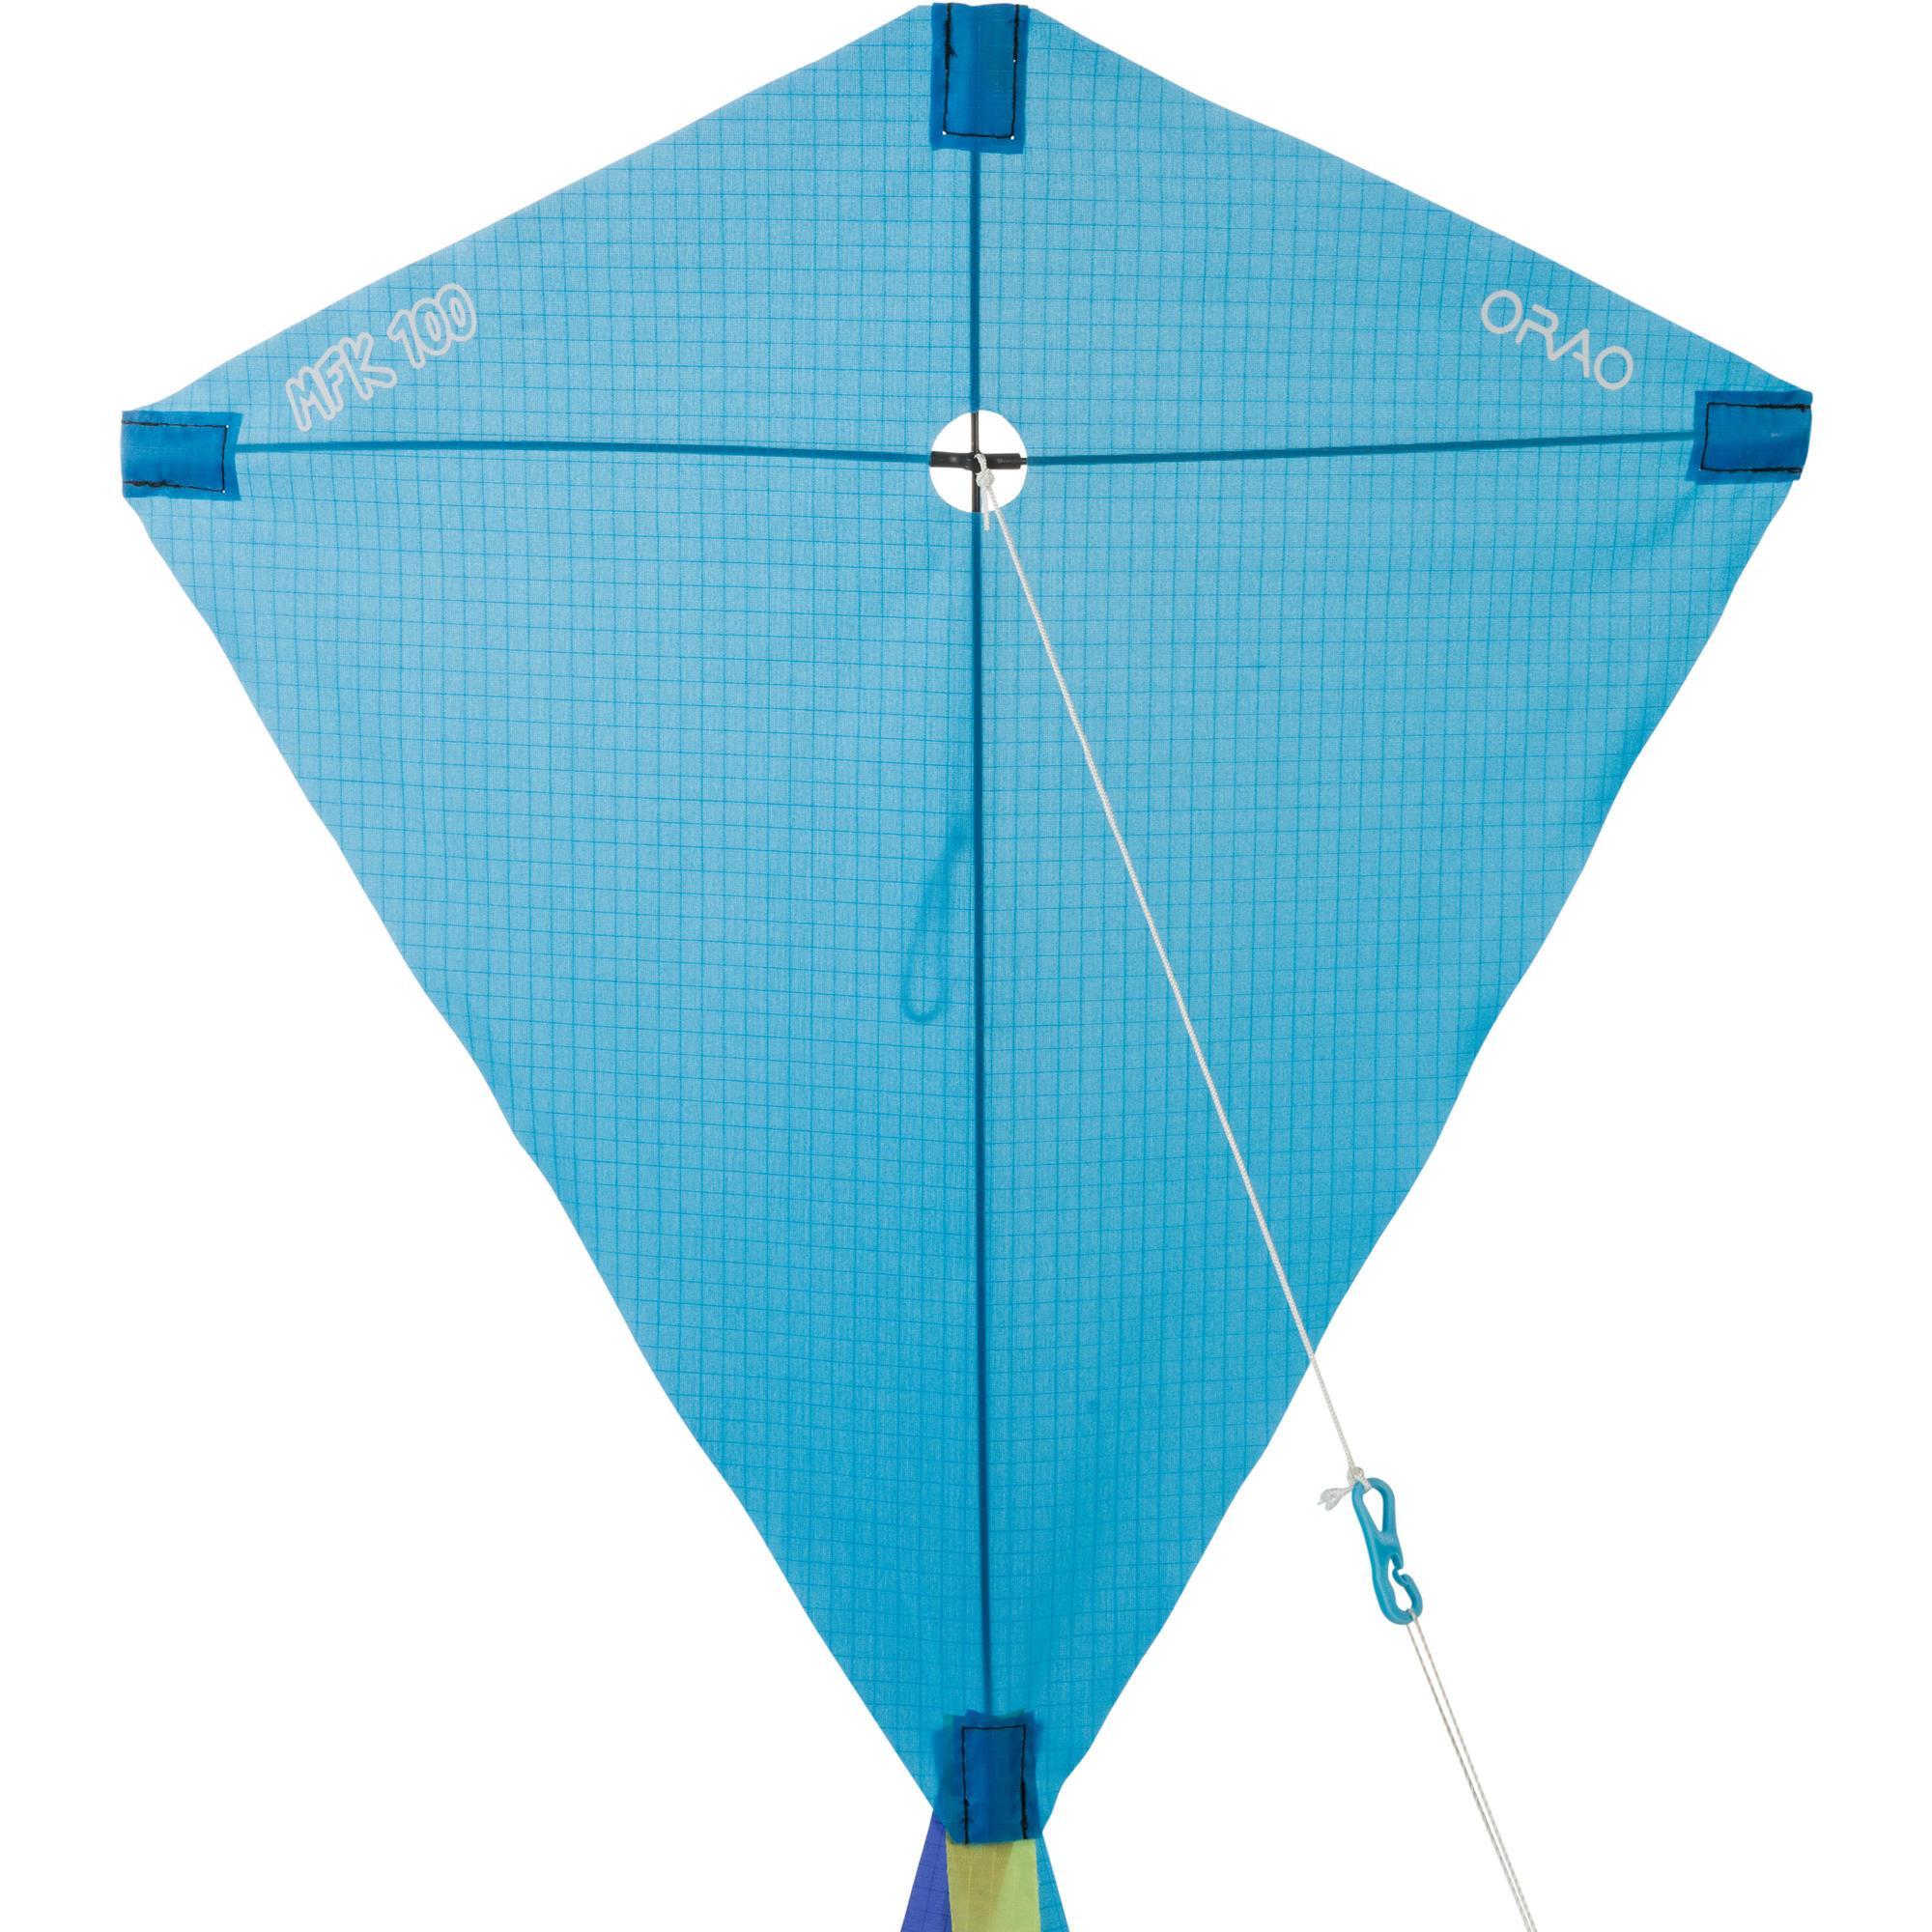 MFK 100 Kite - Decathlon